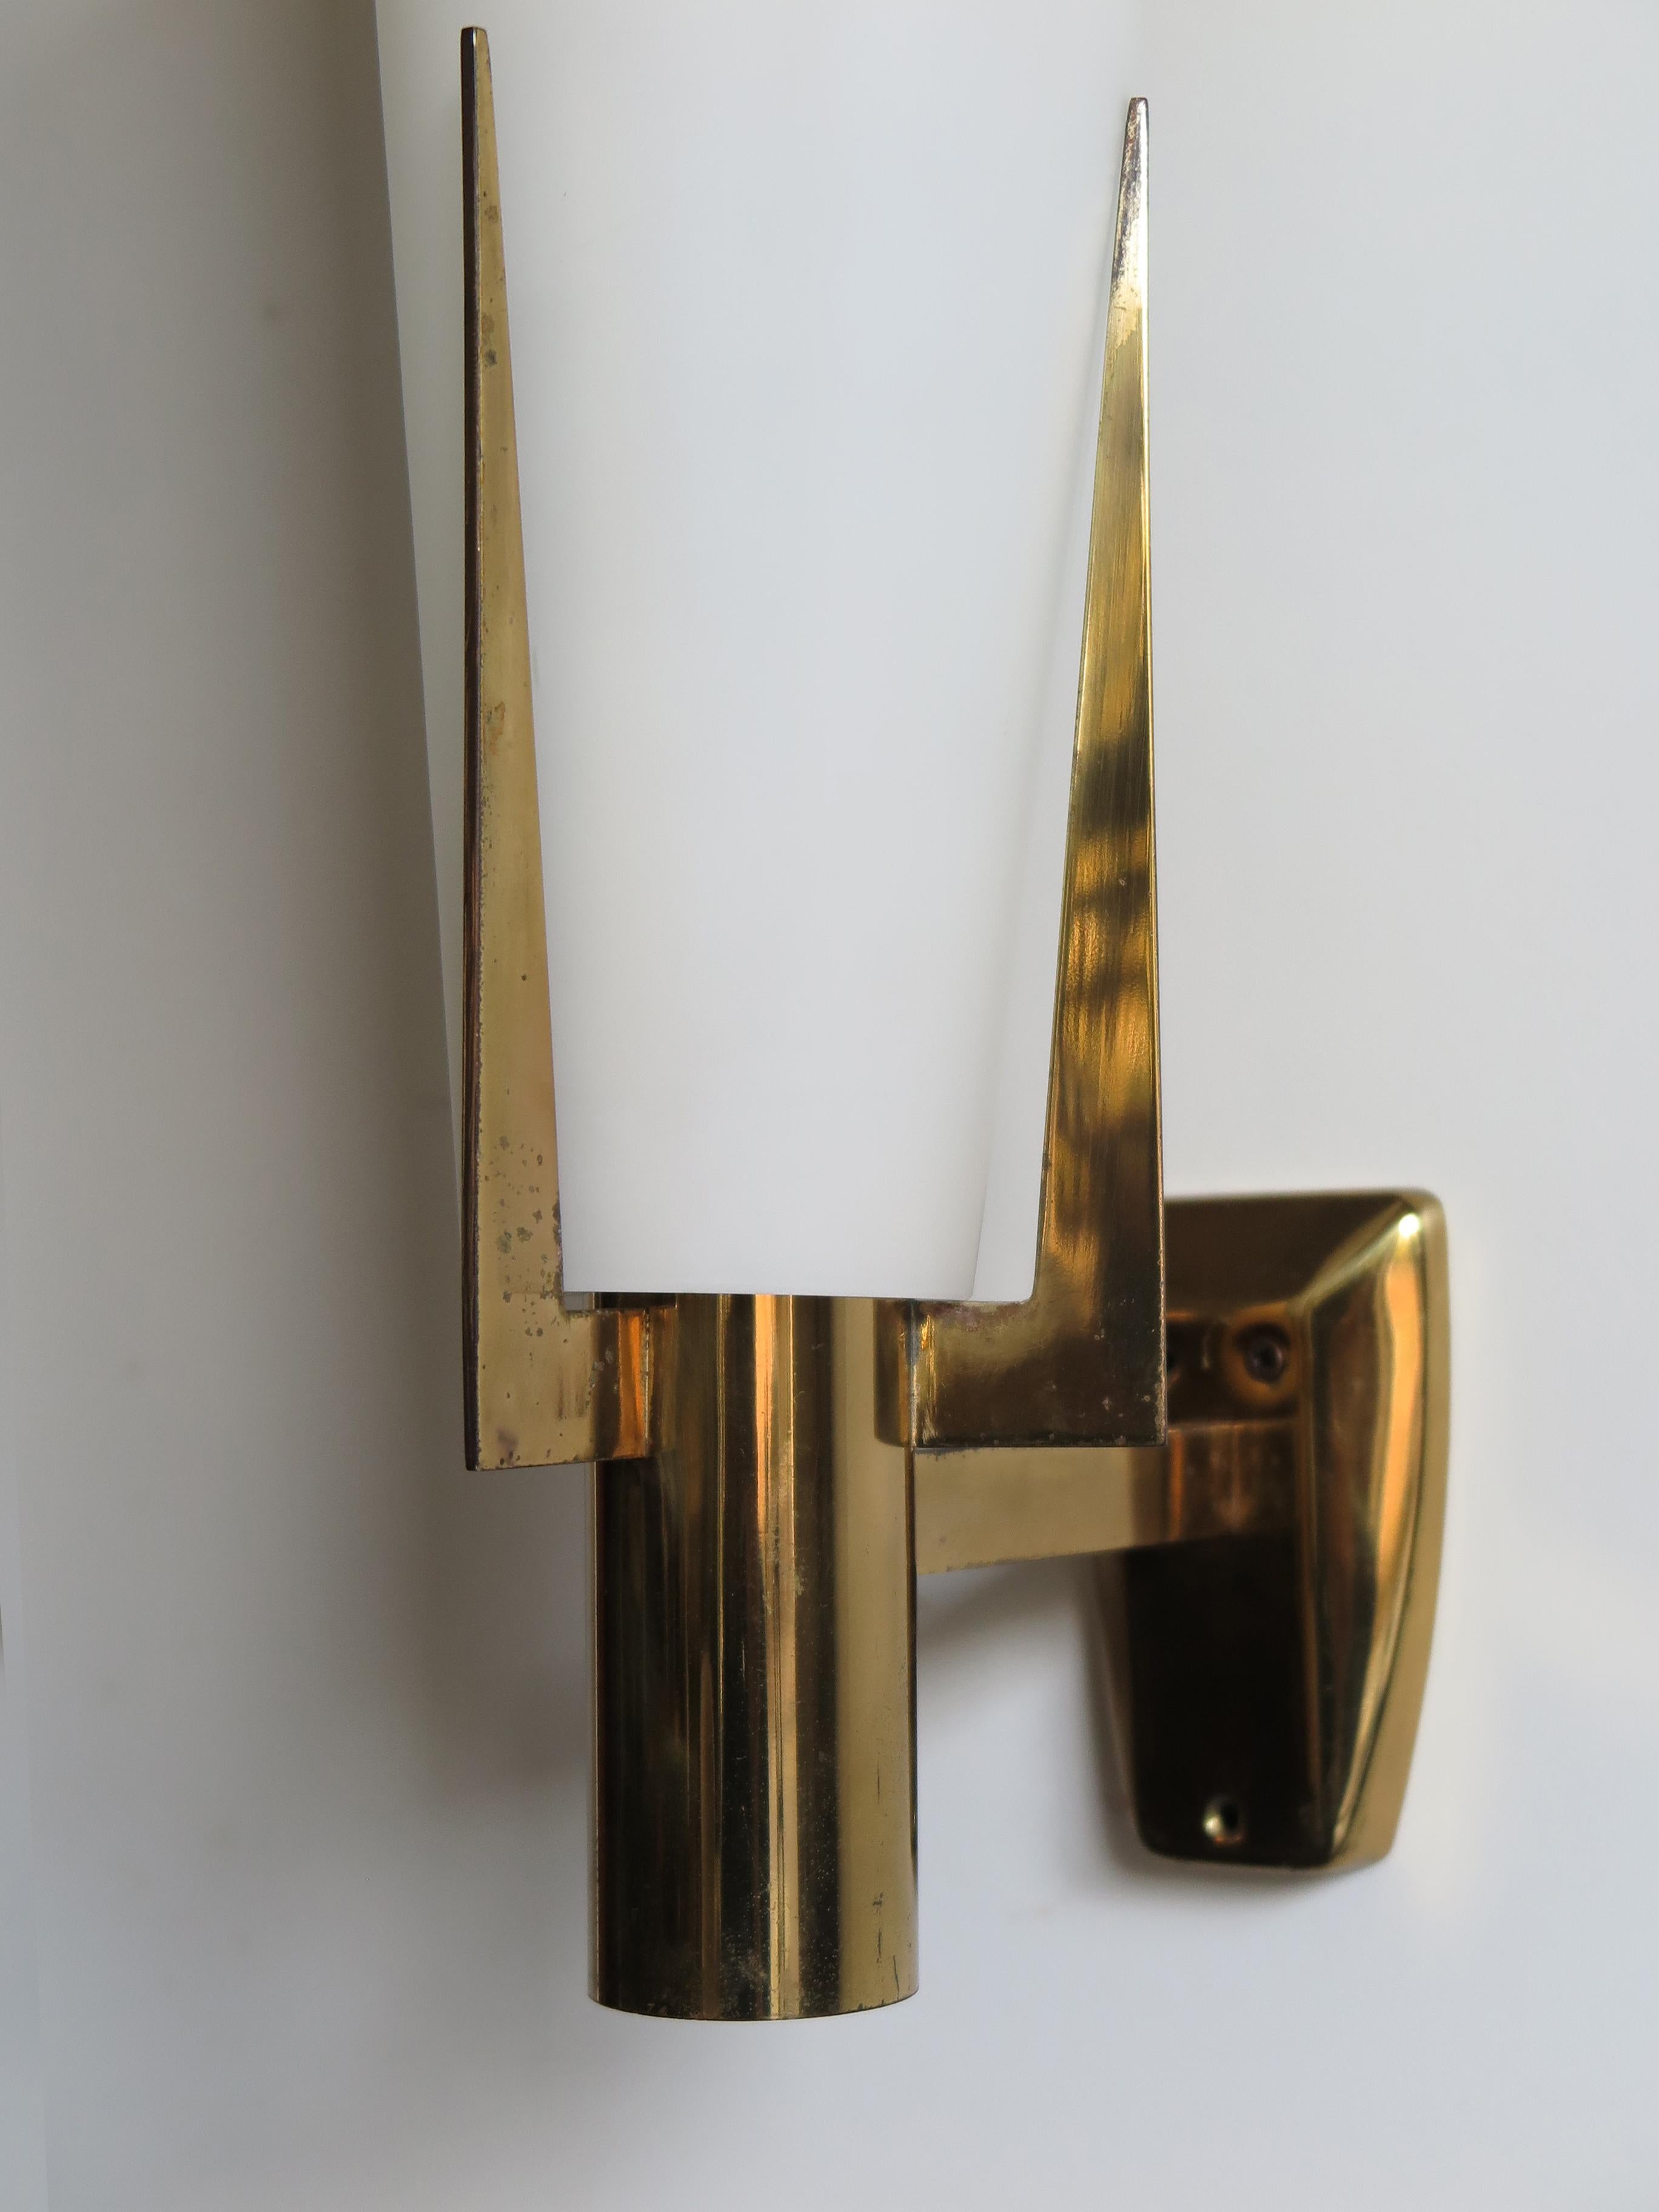 Italian Stilnovo Brass Glass Midcentury Sconce Wall Lamp, 1950s For Sale 1